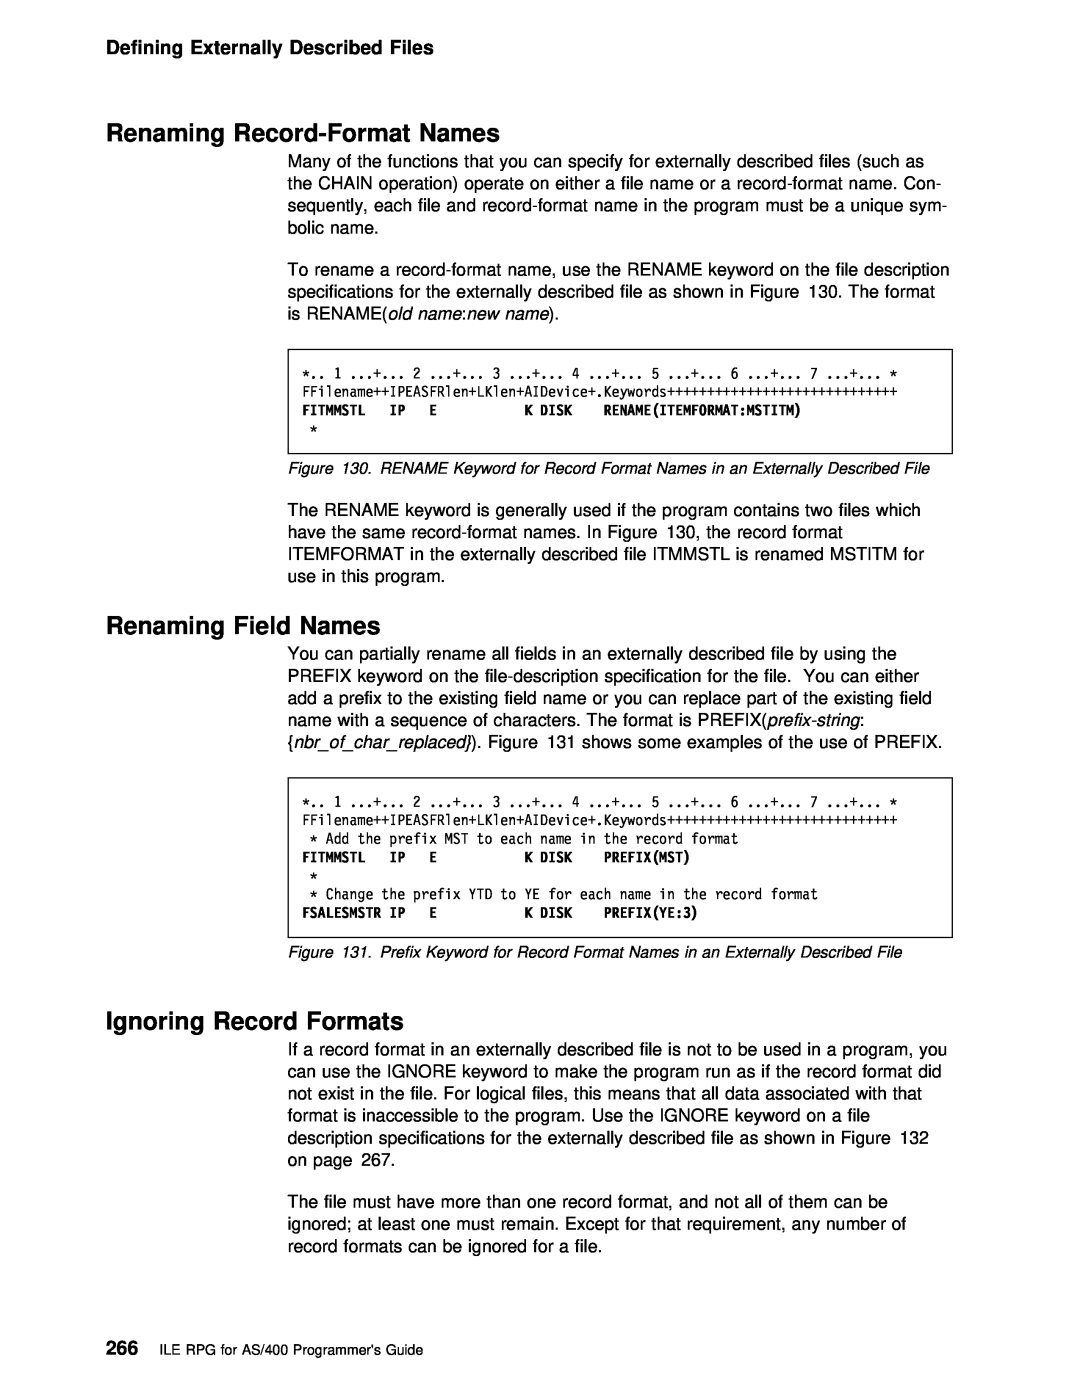 IBM AS/400 manual Renaming Record-Format Names, Ignoring Record Formats, Renaming Field Names, nbrofcharreplaced. Figure 